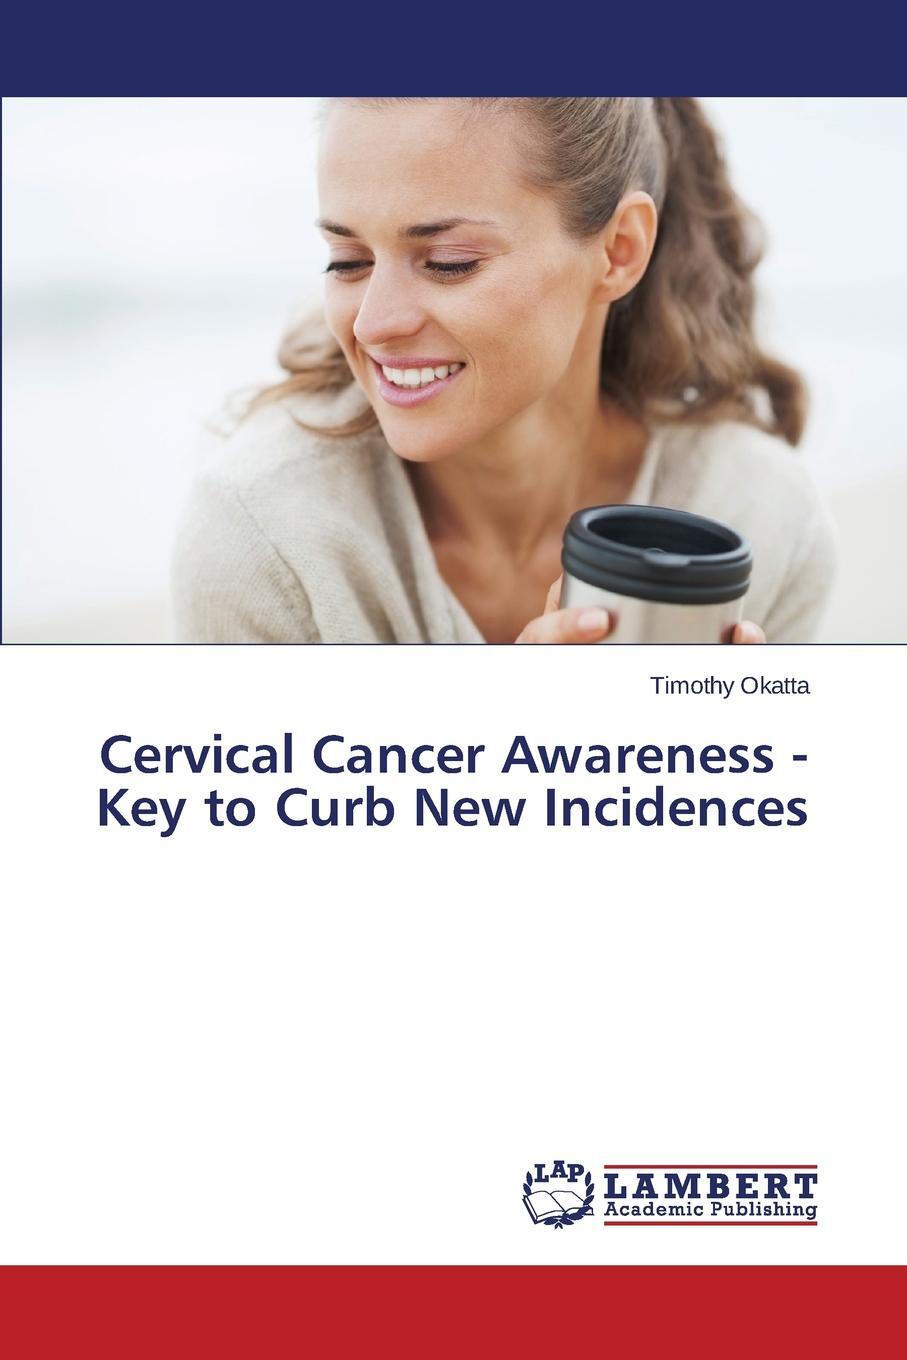 Cervical Cancer Awareness.